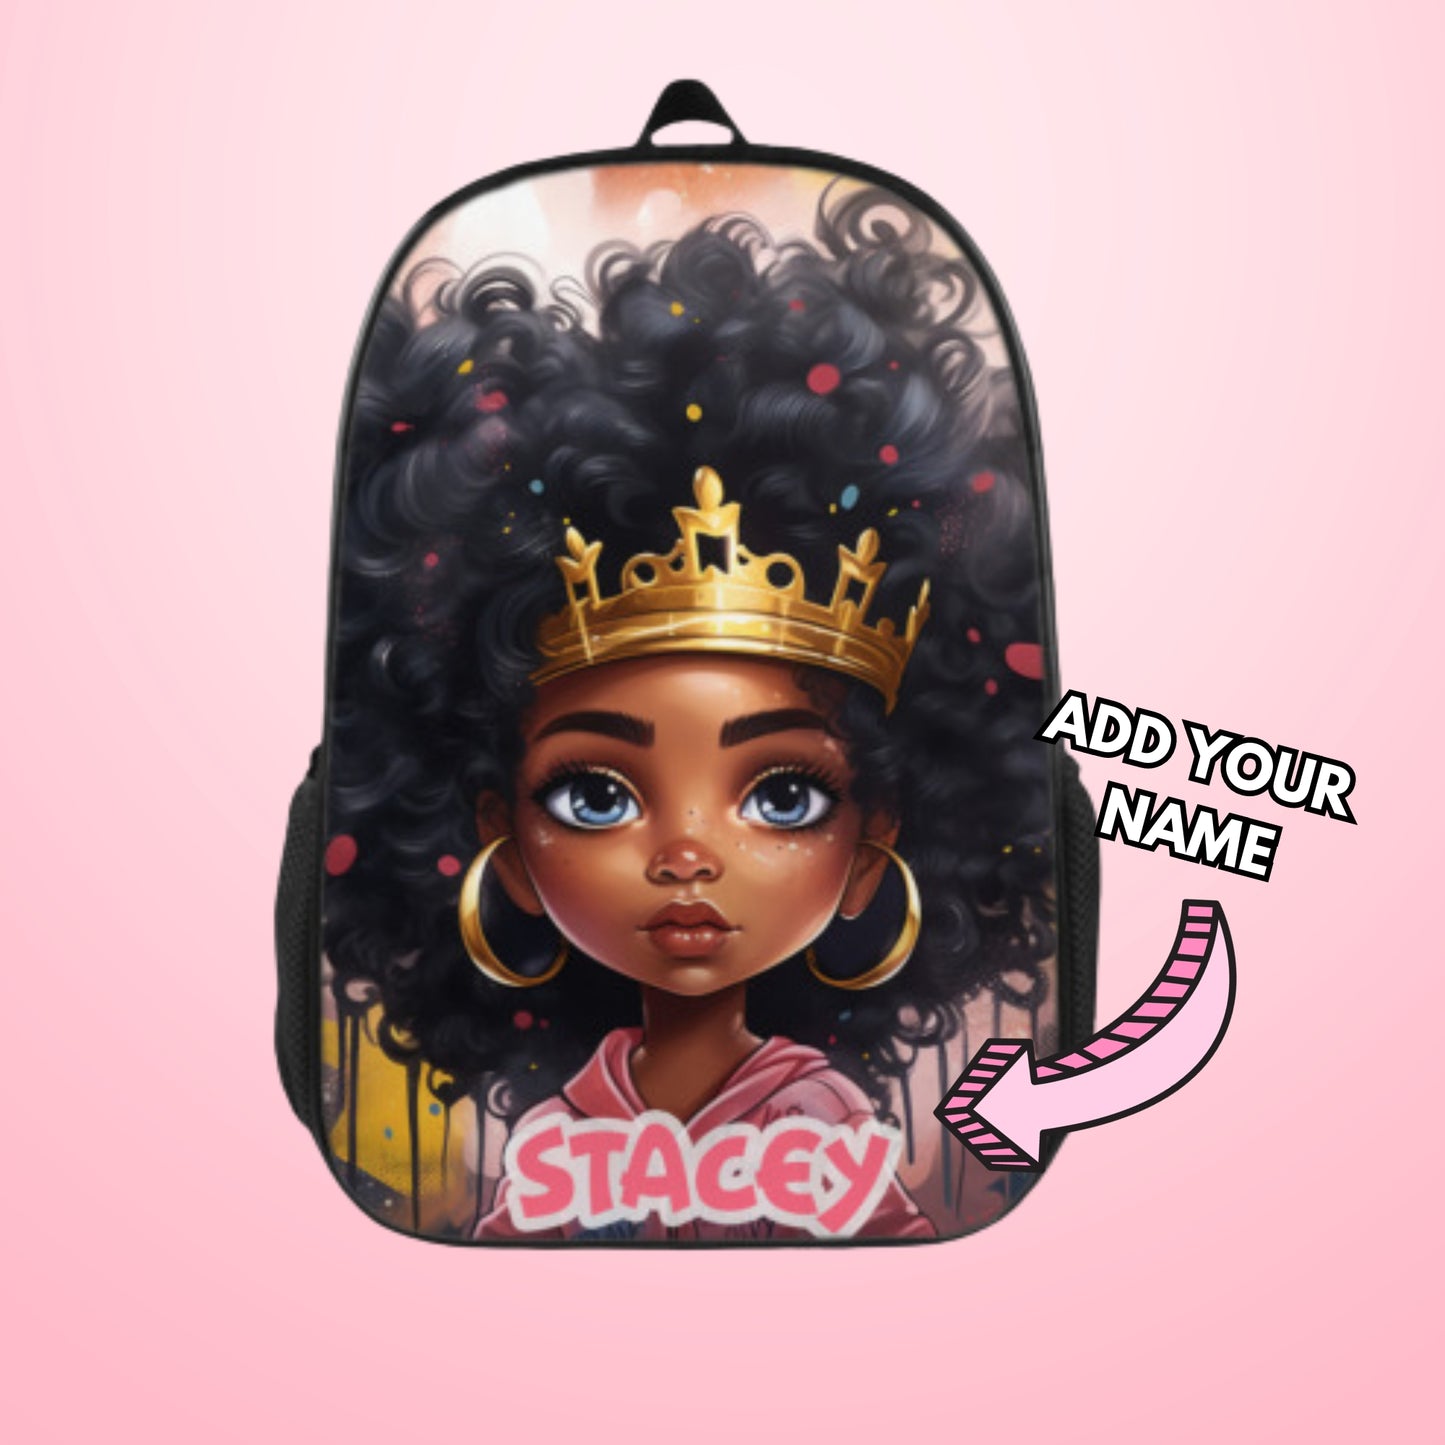 Personalised school bag for black girls